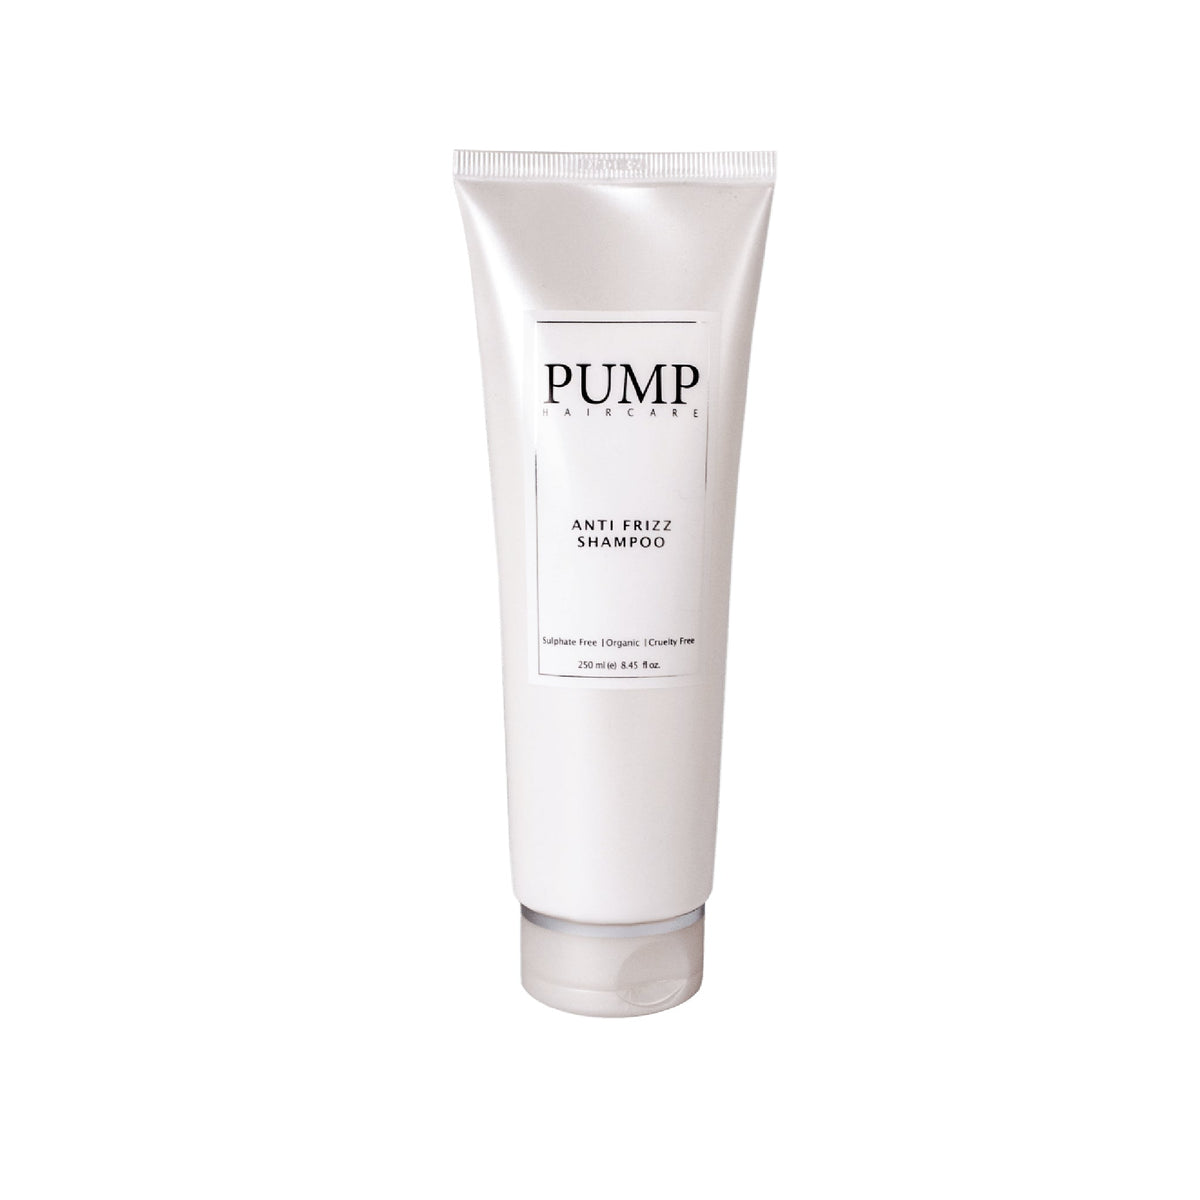 Pump Anti Frizz Shampoo - Haircare Superstore